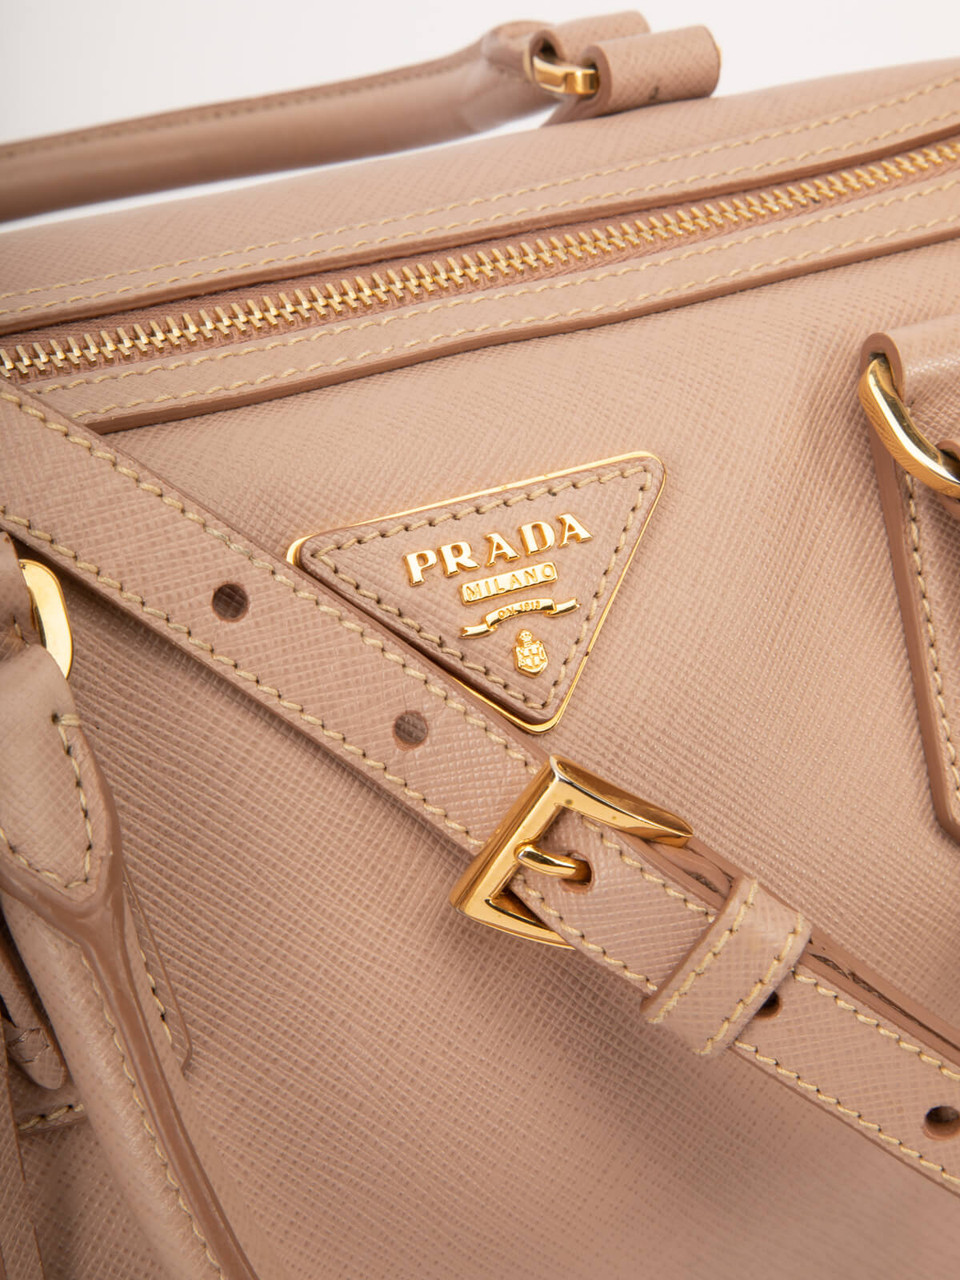 Prada Women's Small Saffiano Lux Bauletto Bag Pink Leather